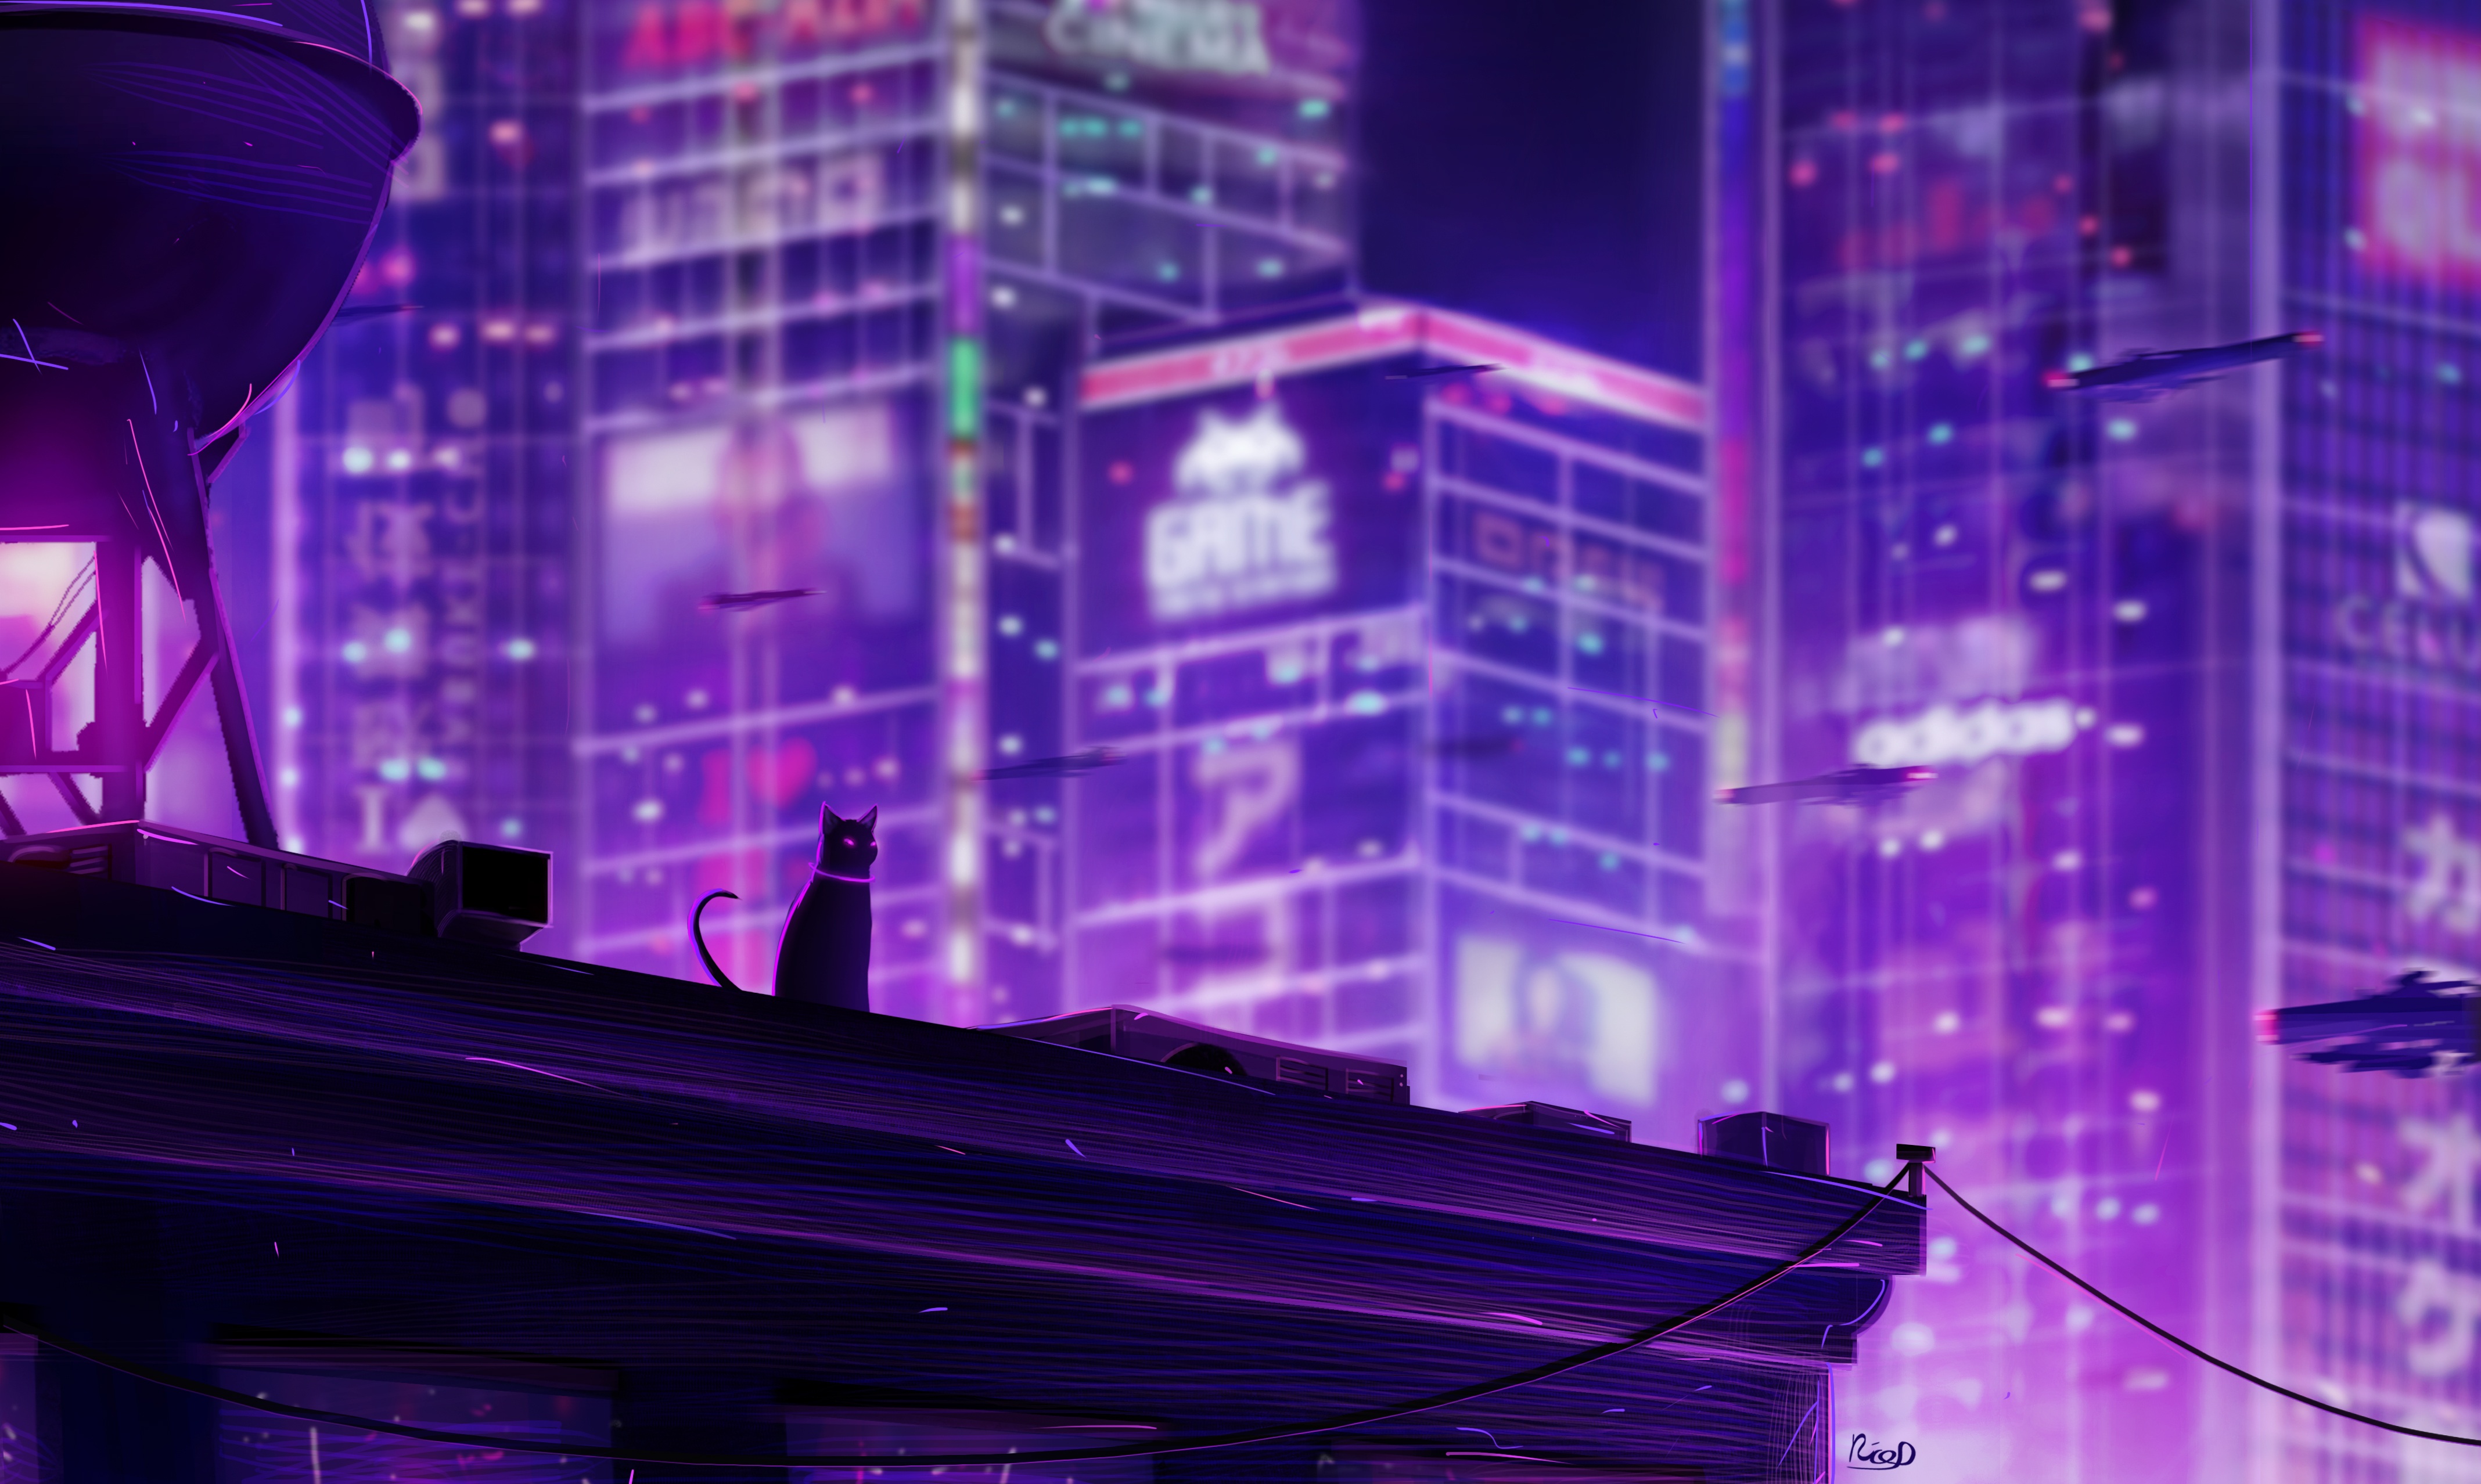 Neo Tokyo by Rico De Zoysa